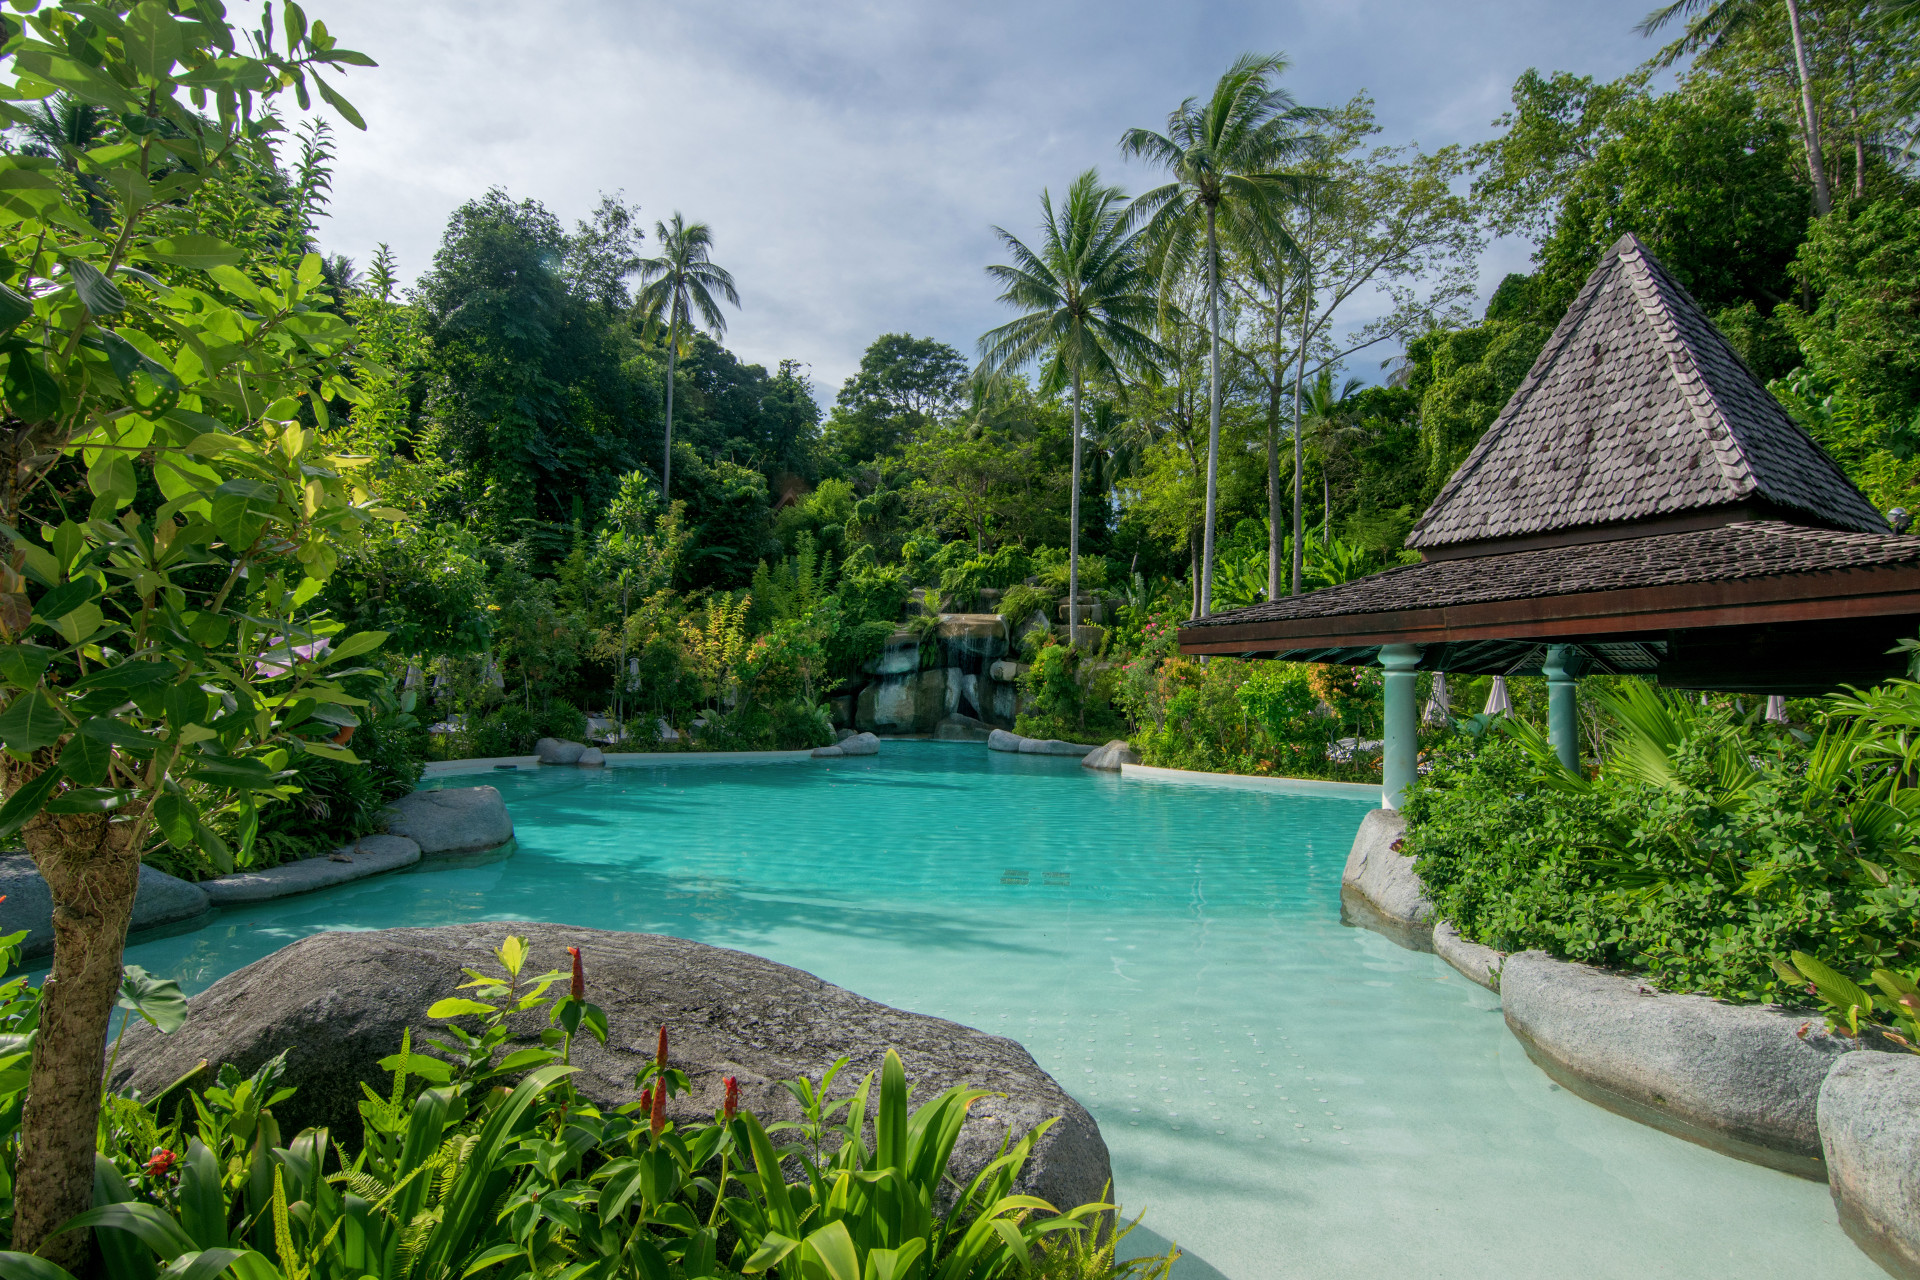 Marina Phuket Resort: Where the jungle meets the sea